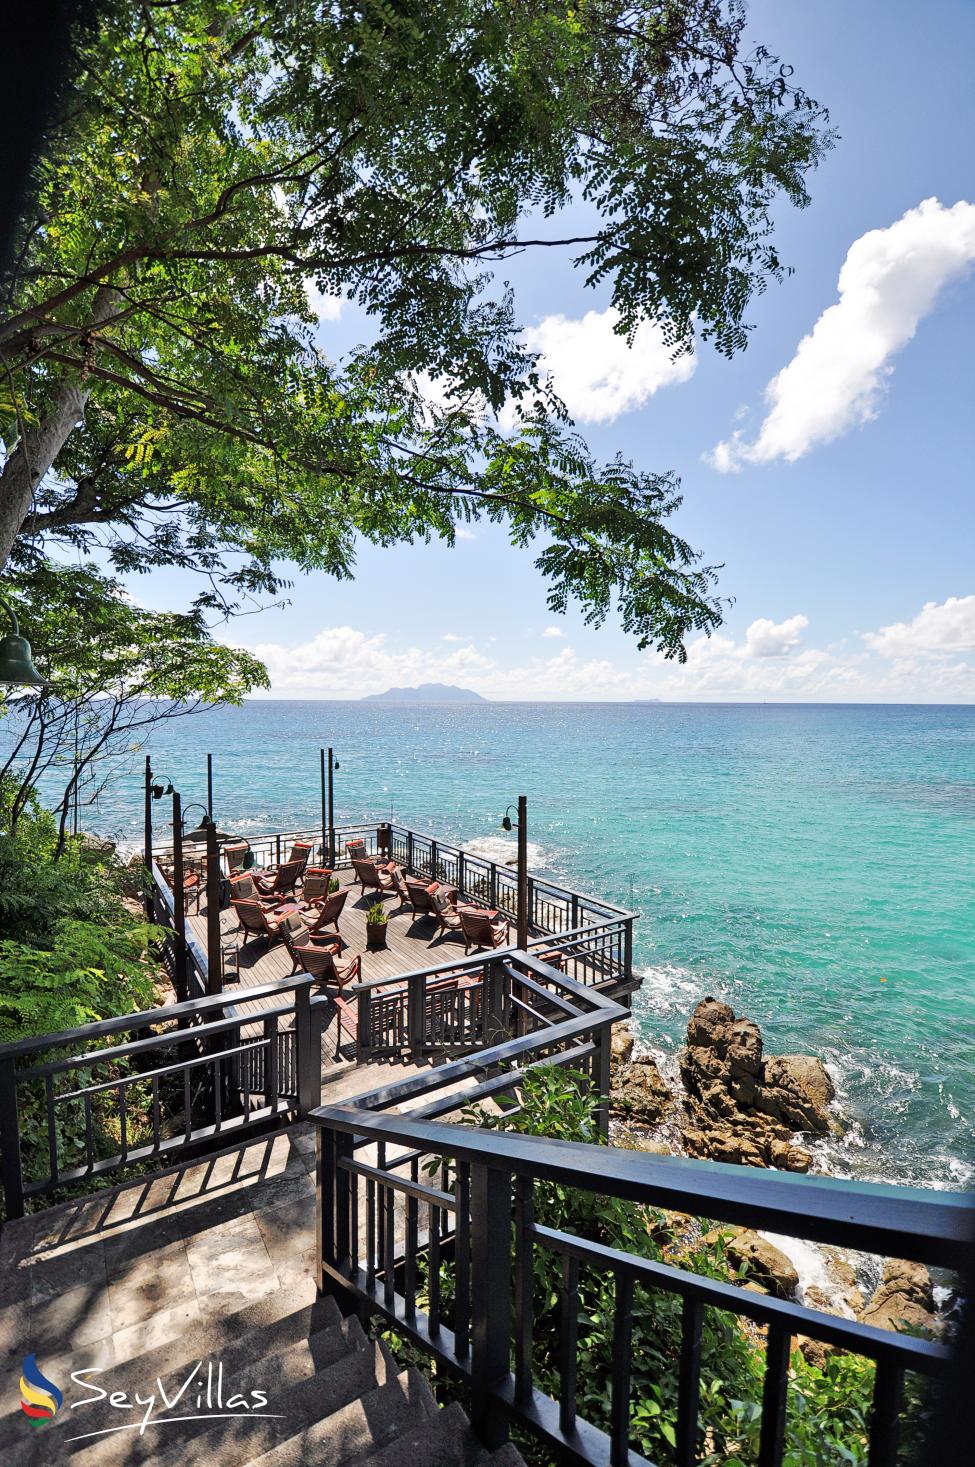 Foto 14: Hilton Seychelles Northolme Resort & Spa - Aussenbereich - Mahé (Seychellen)